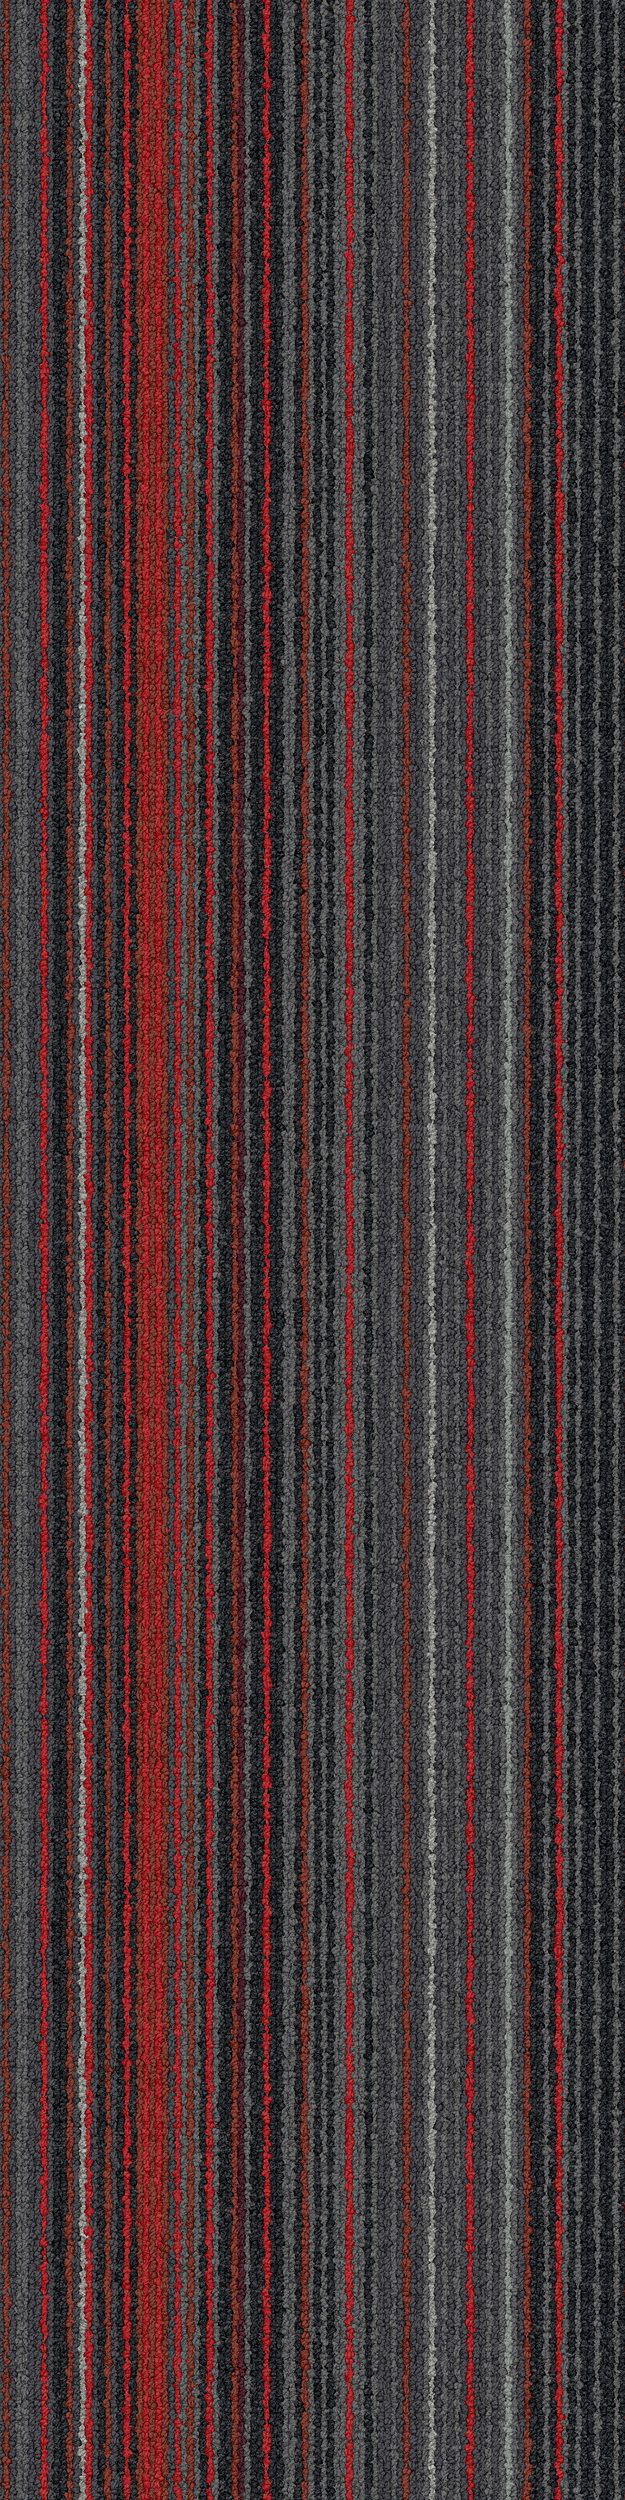 Aglow Carpet Tile In Iron Poppy imagen número 2